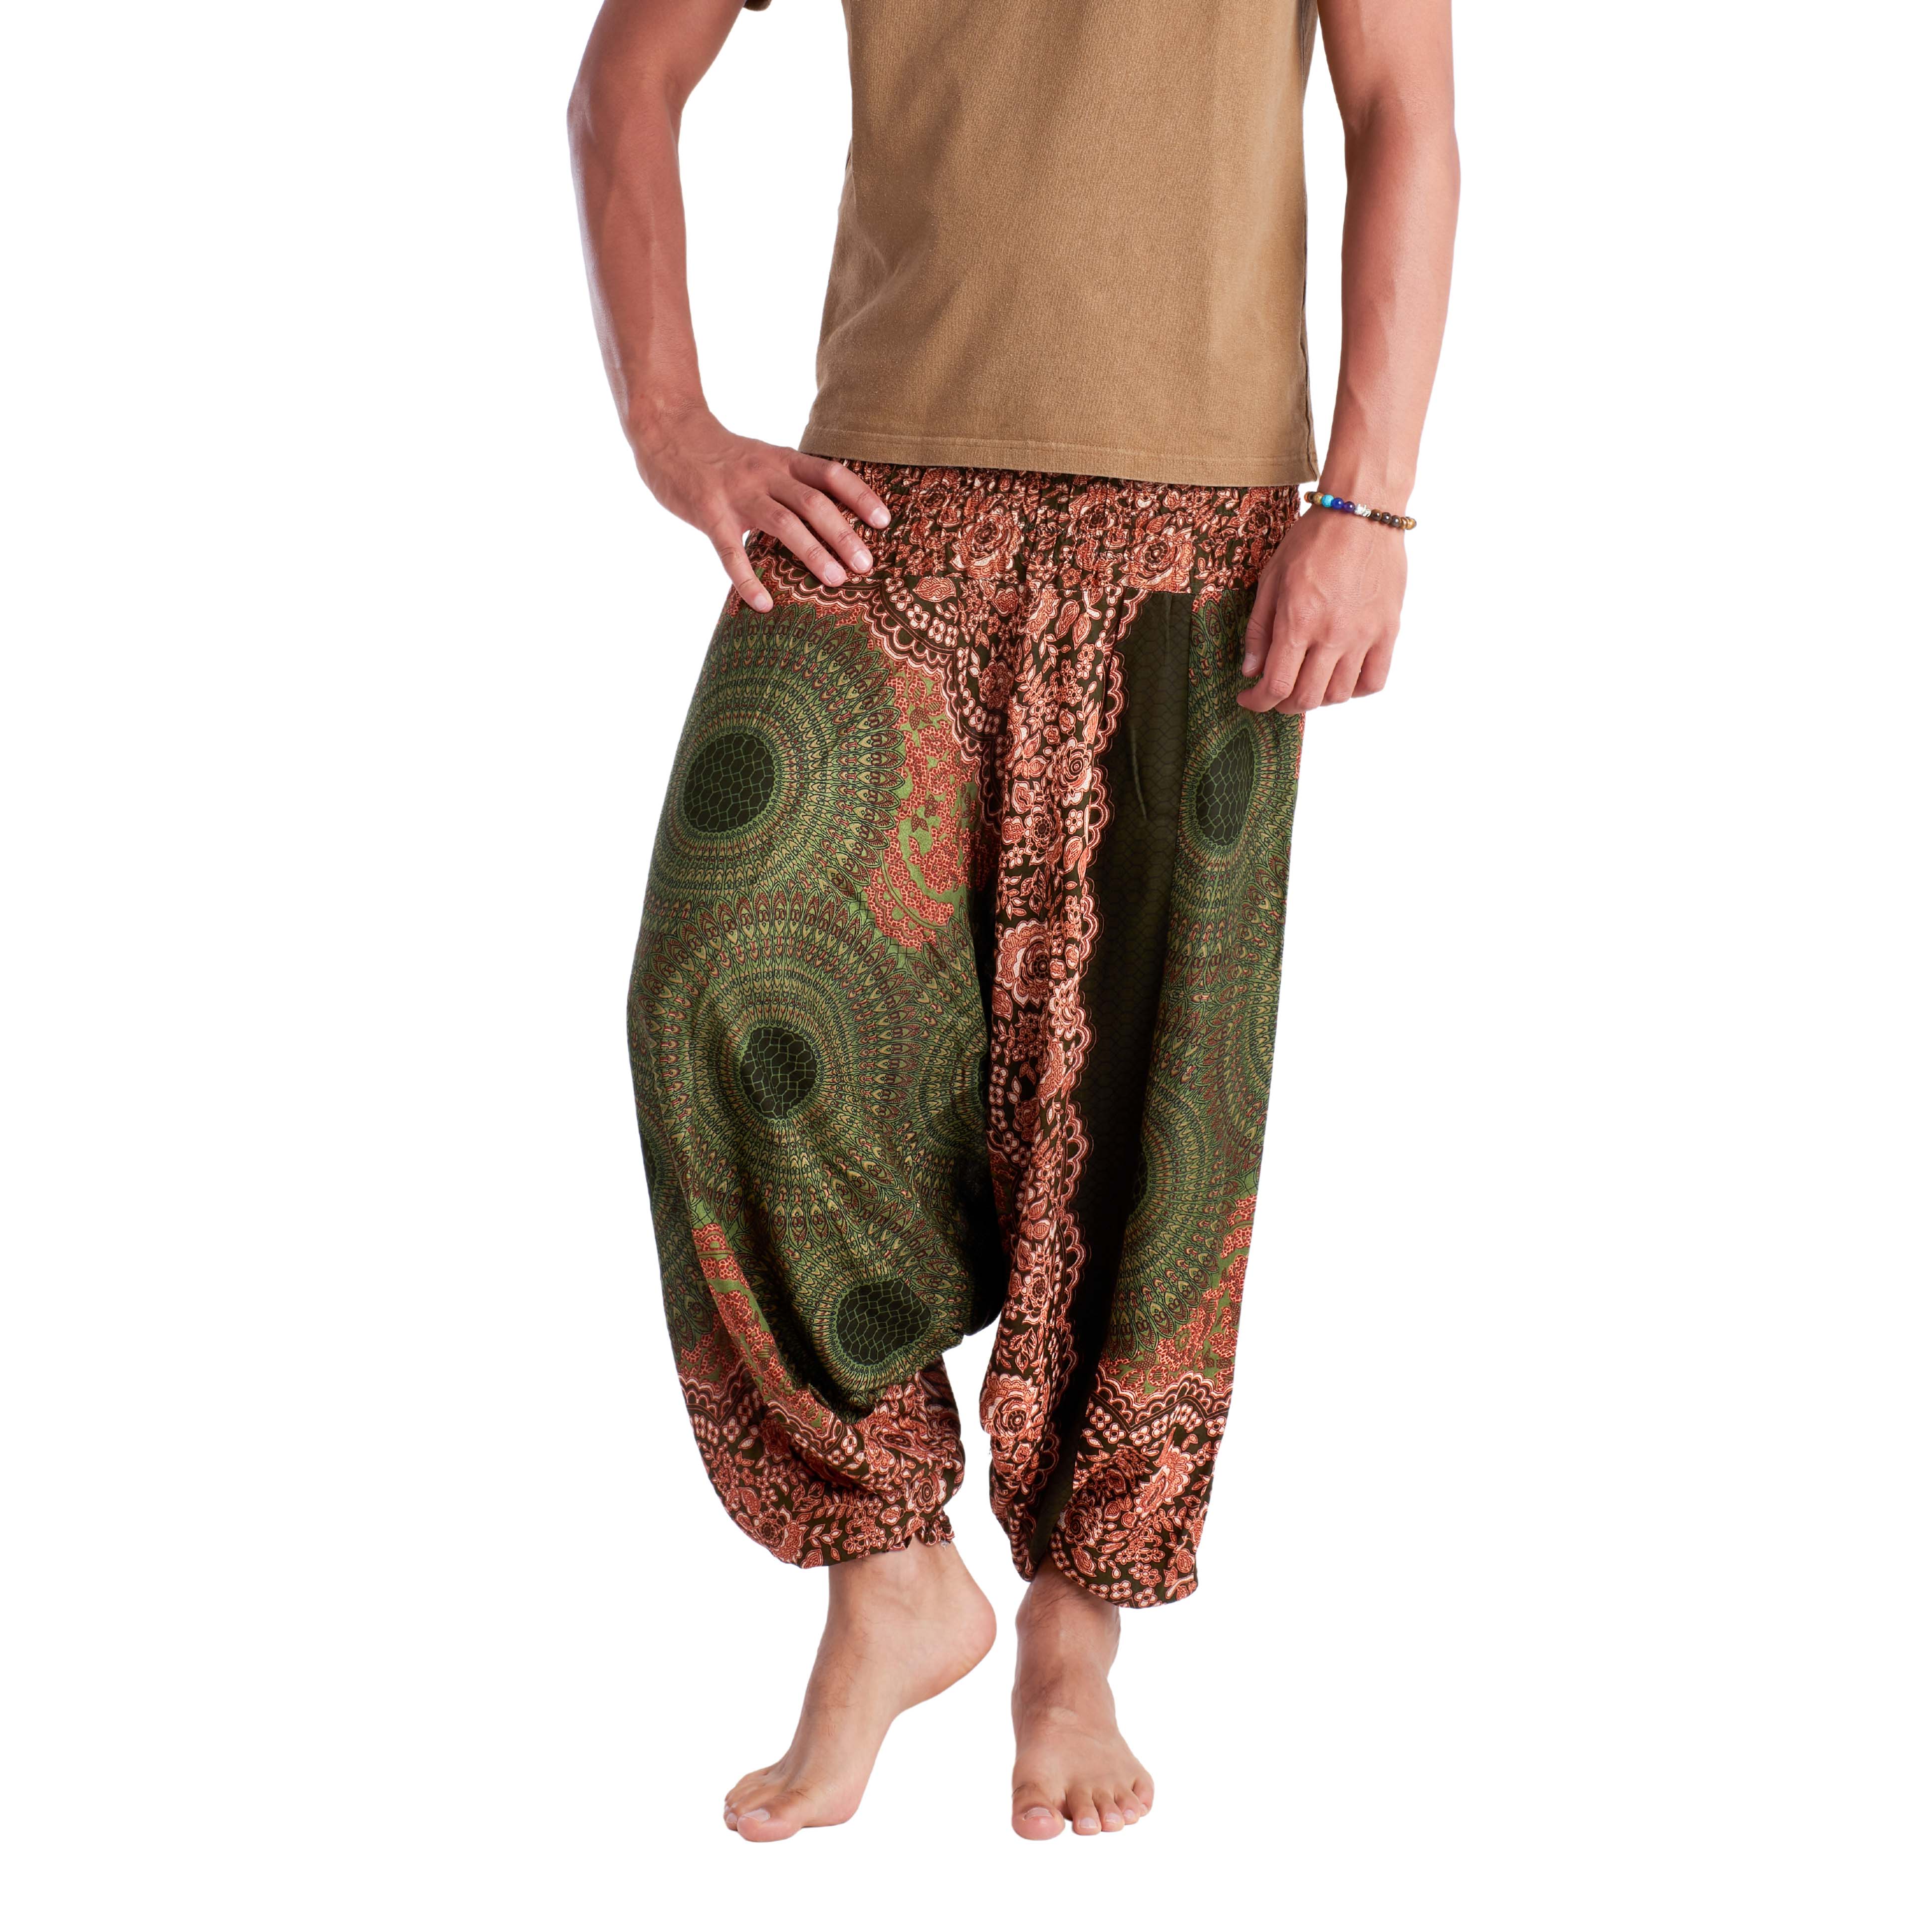 BINTAN YOGA PANTS Elepanta Aladdin Pants - Buy Today Elephant Pants Jewelry And Bohemian Clothes Handmade In Thailand Help To Save The Elephants FairTrade And Vegan